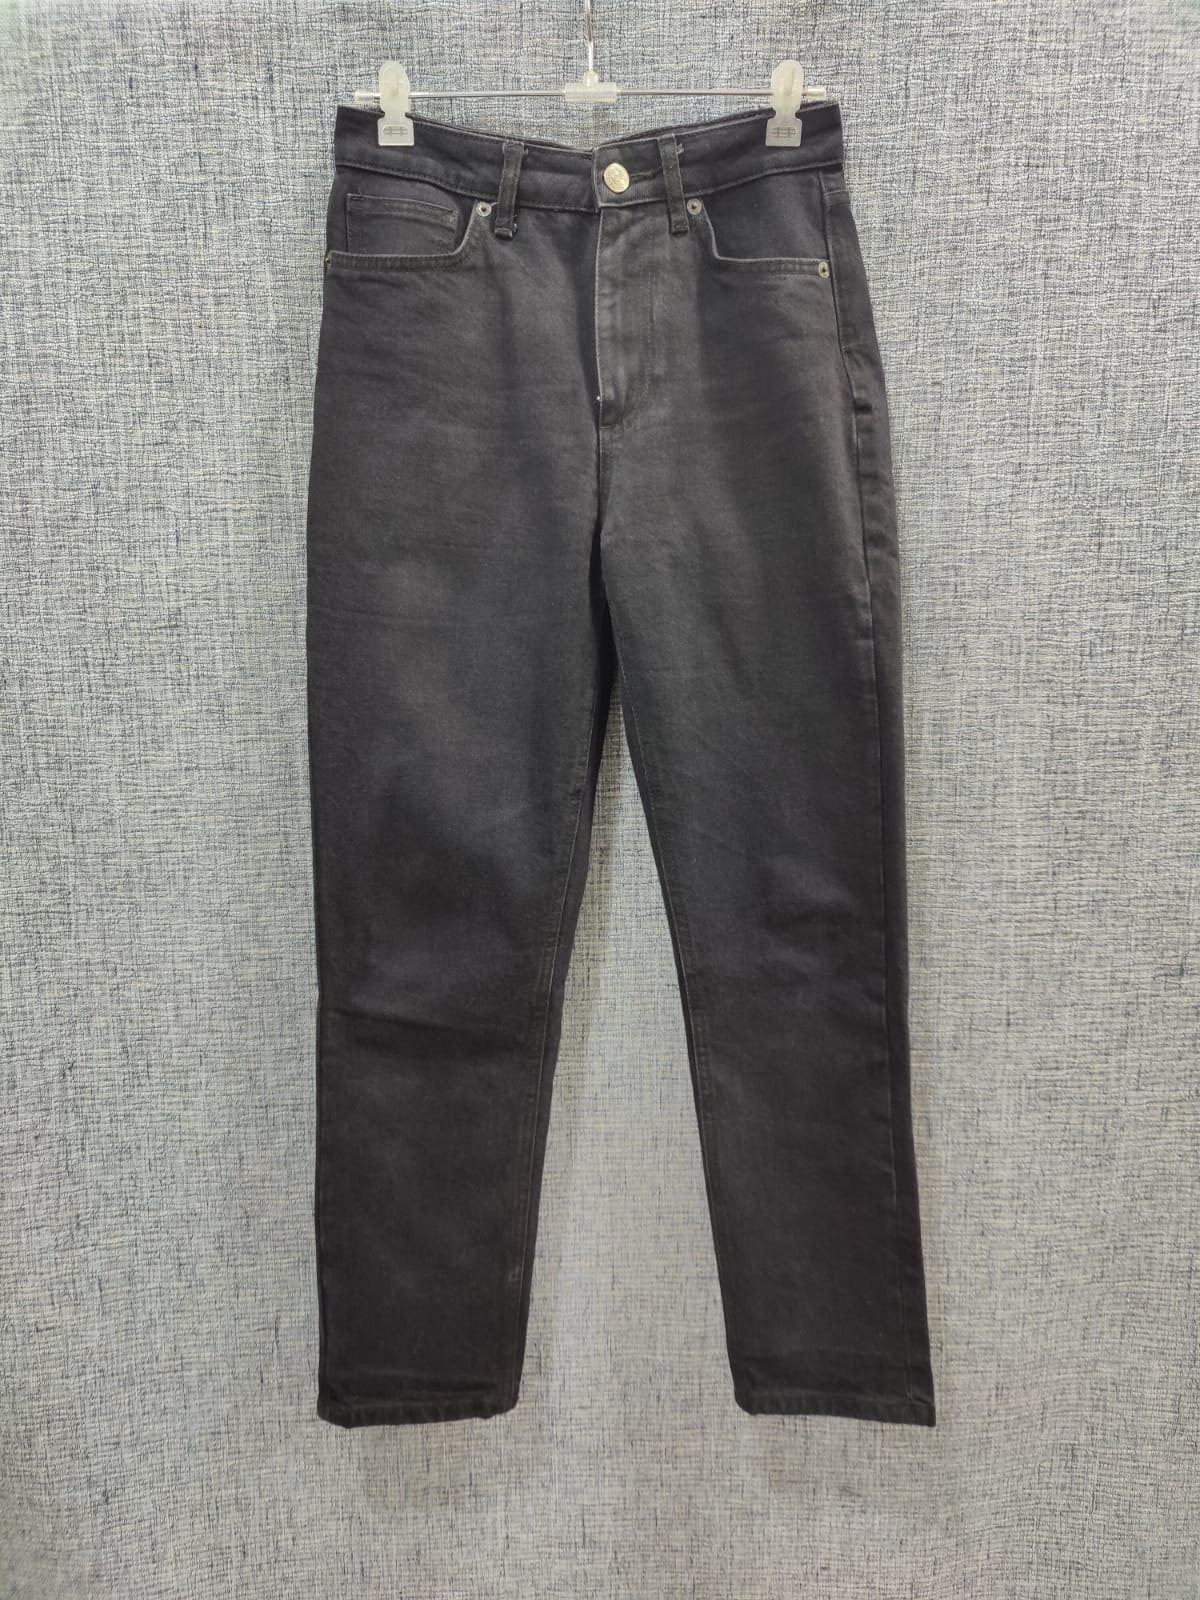 Women's High Waist Cargo Black Jeans 6 Pocket Wide Leg Denim Pants